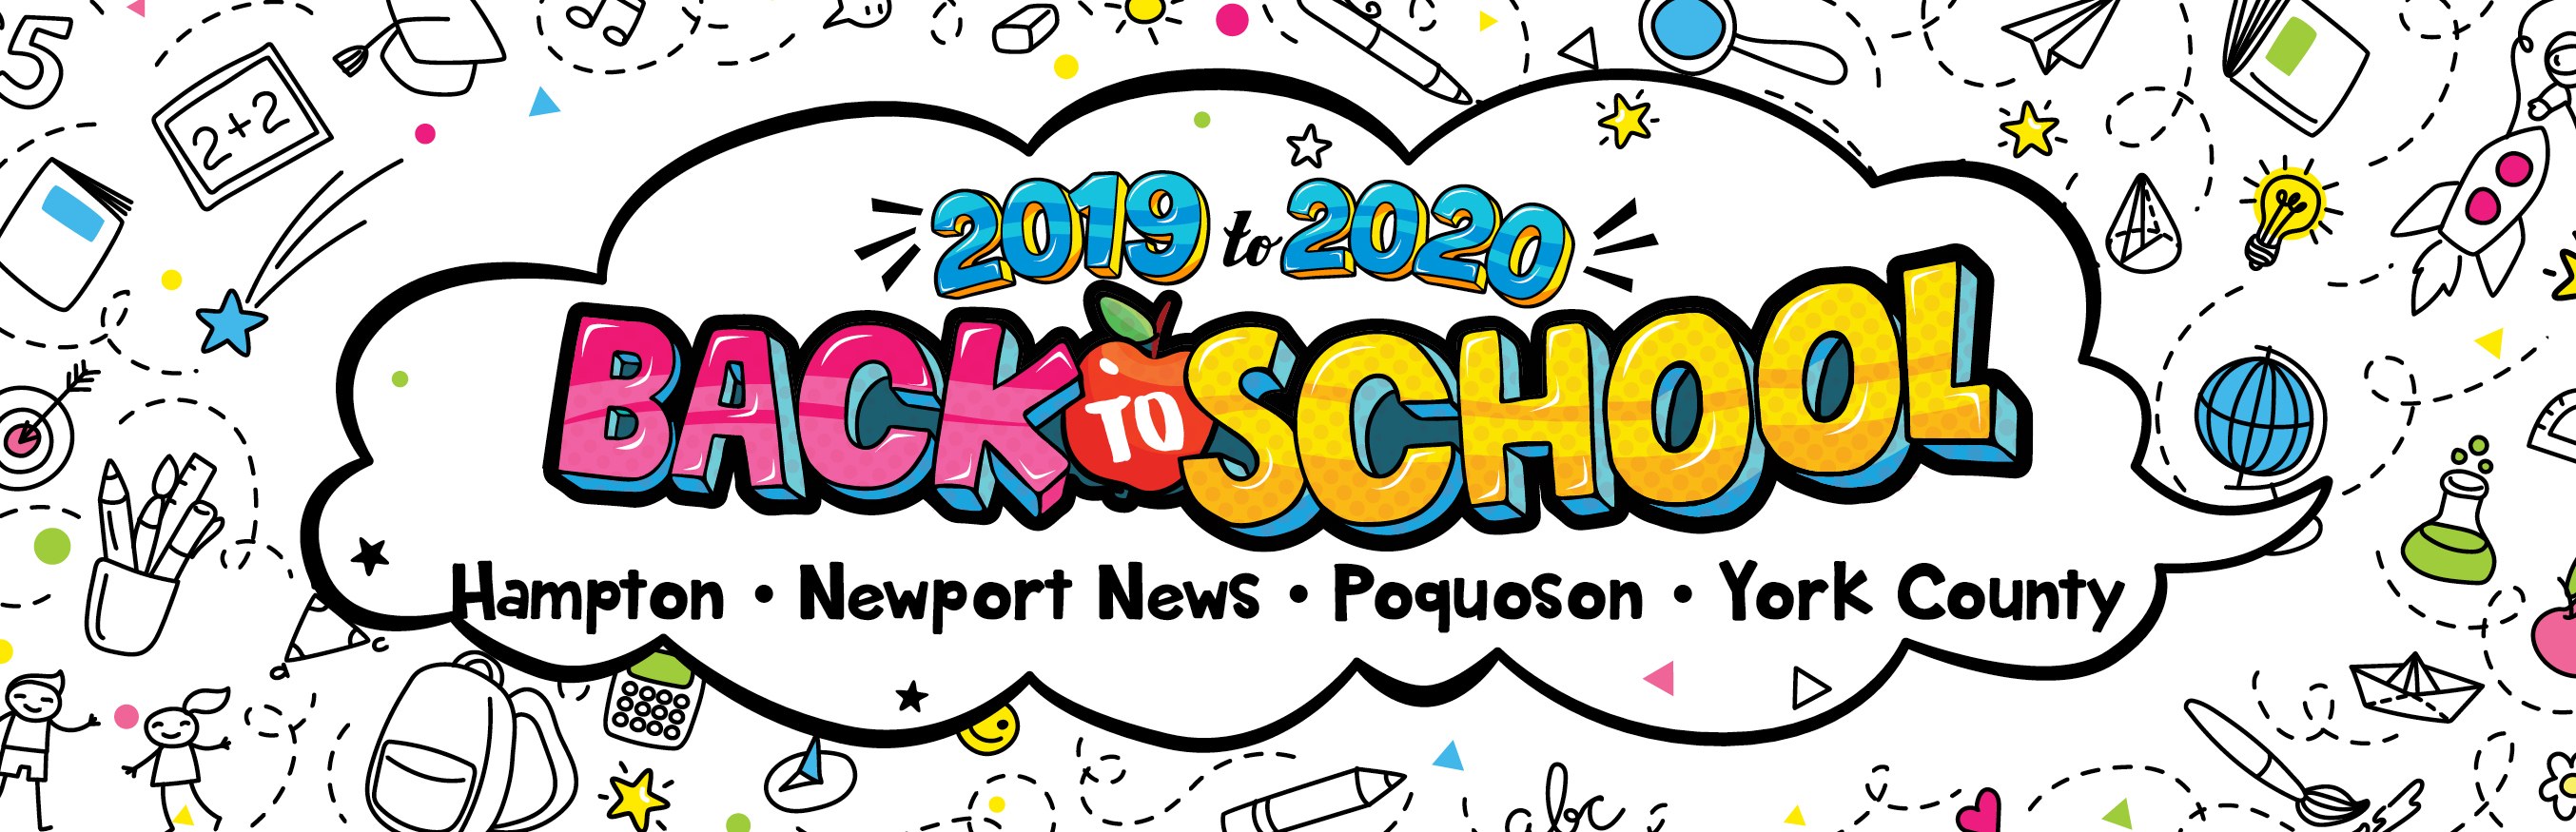 2019-2020 School Calendar - Hampton, Newport News, Poquoson, York County